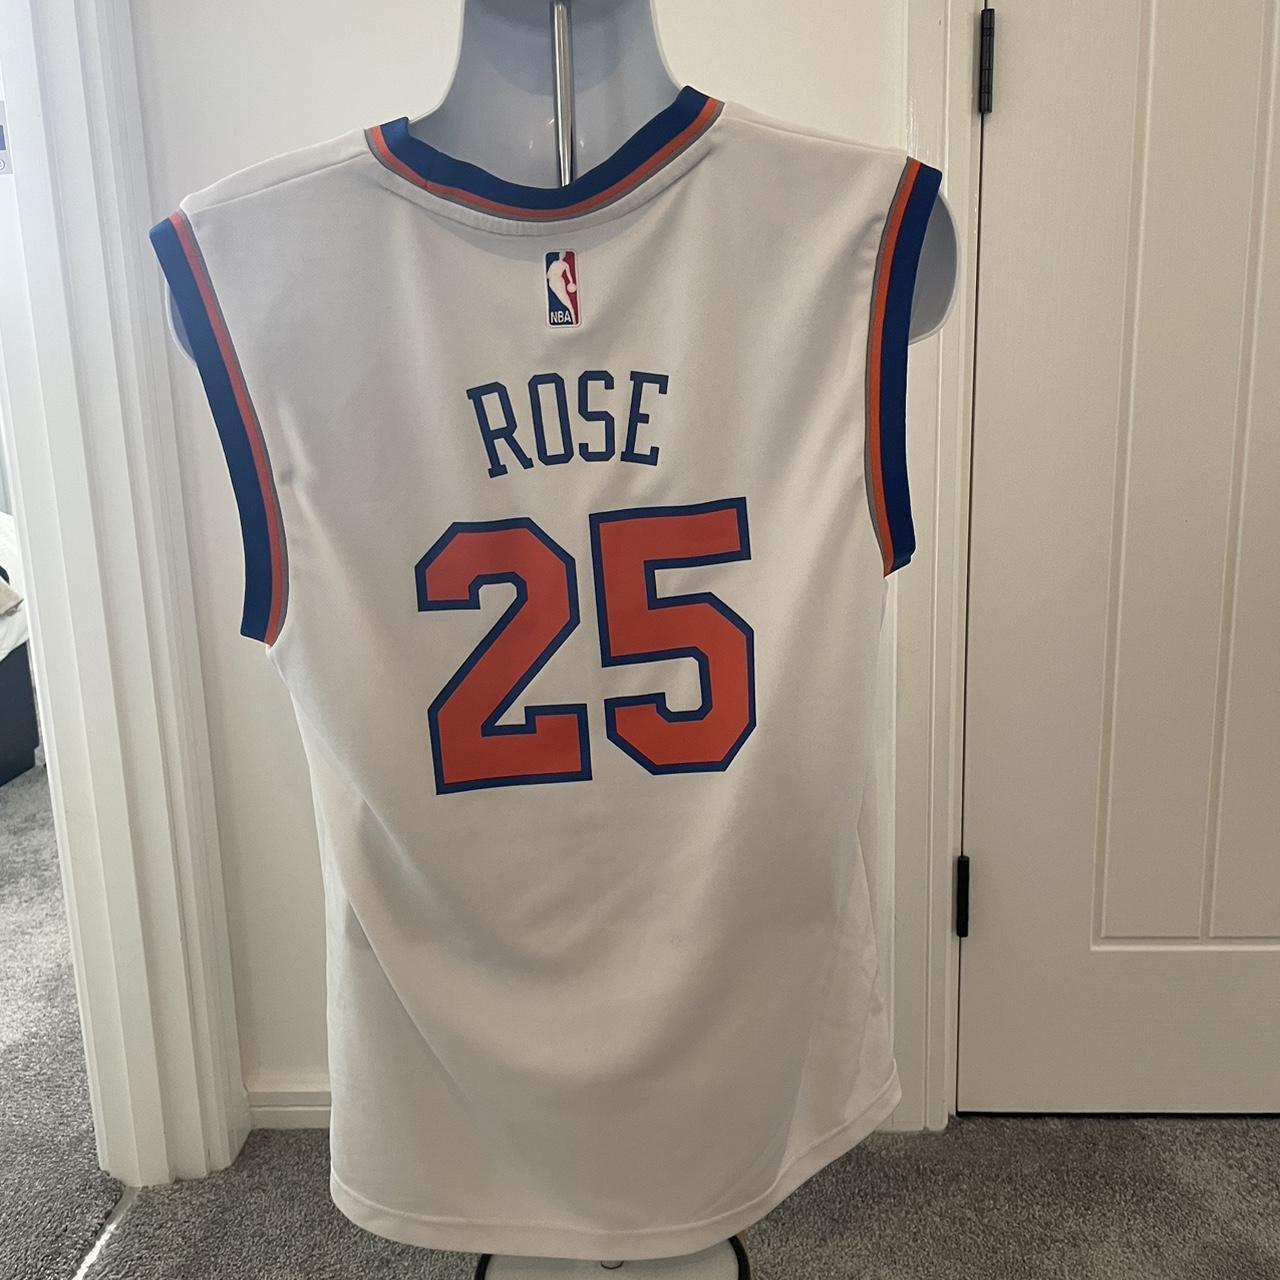  adidas New York Knicks Rose 25 Mens NBA Basketball